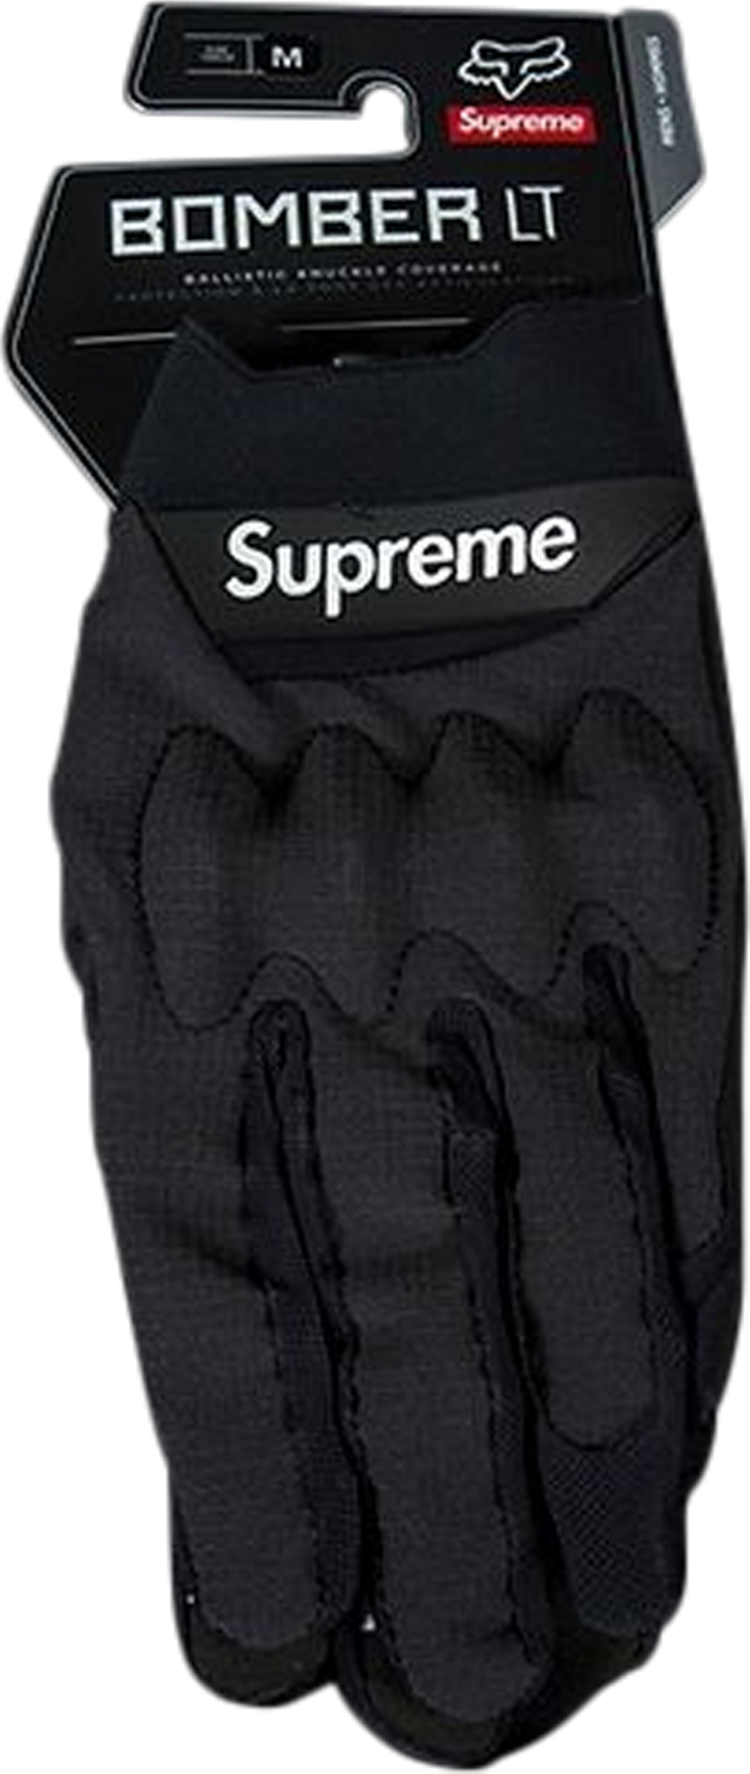 Supreme x Fox Racing Bomber Lt Gloves 'Black'